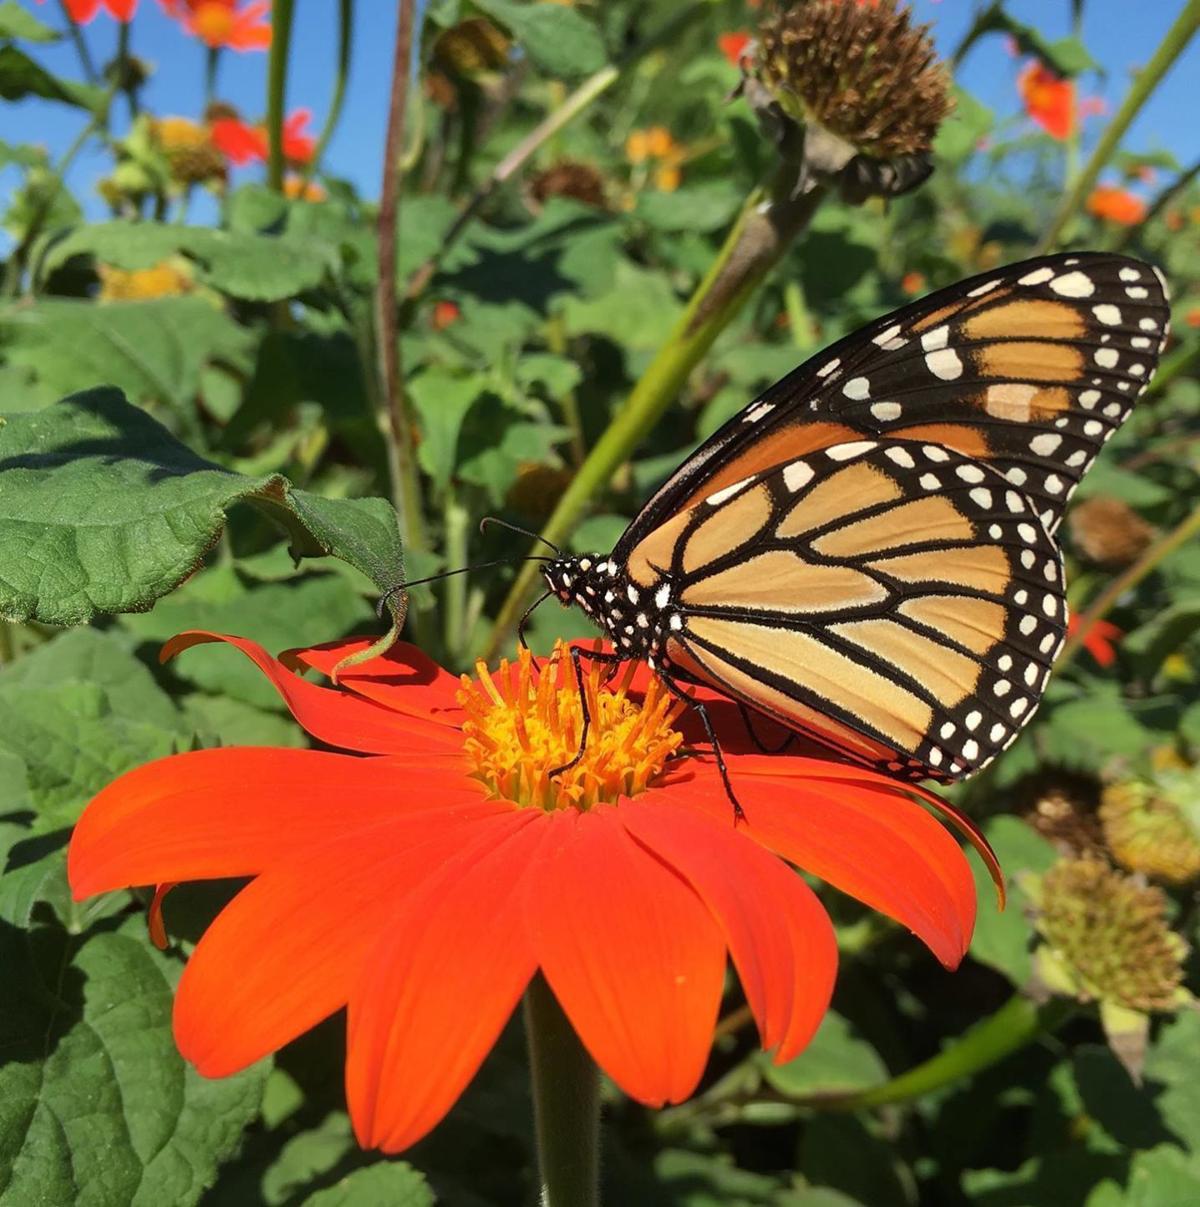 Allsup Plant Greenery To Help Monarch Butterflies Home Garden Pantagraph Com